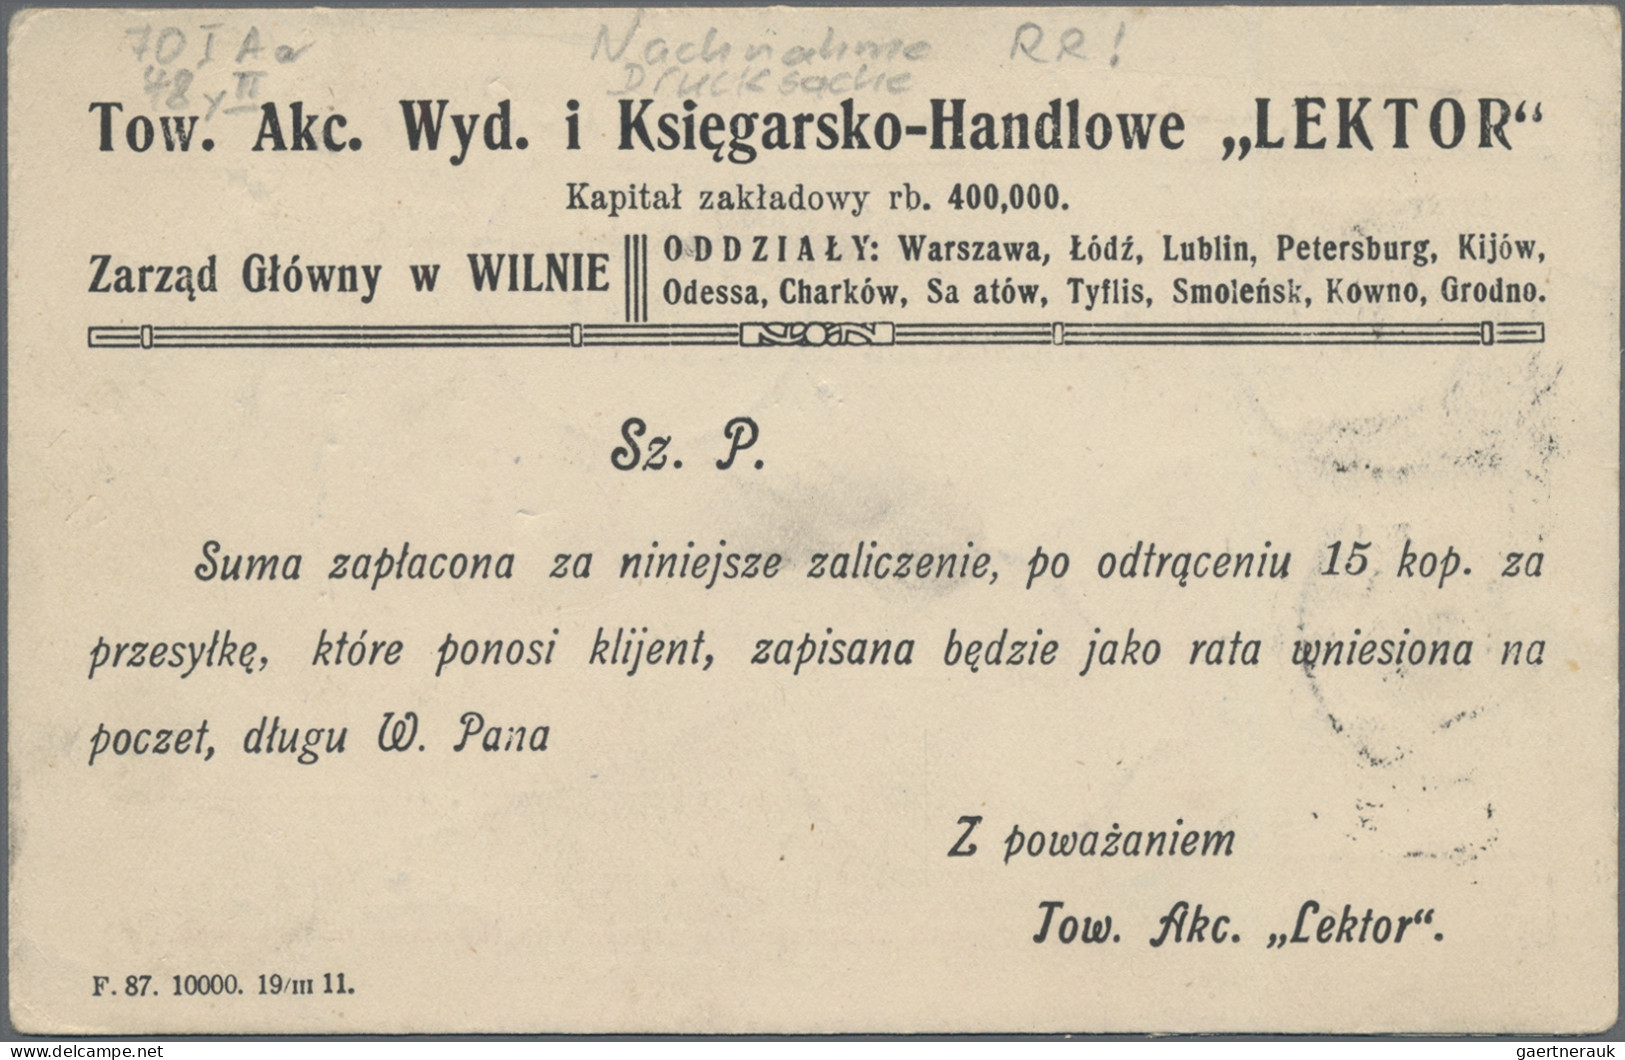 Russia: 1911 Registered C.O.D. Card From Vilna To Gorolyshe, Kiev Franked 1908 5 - Briefe U. Dokumente